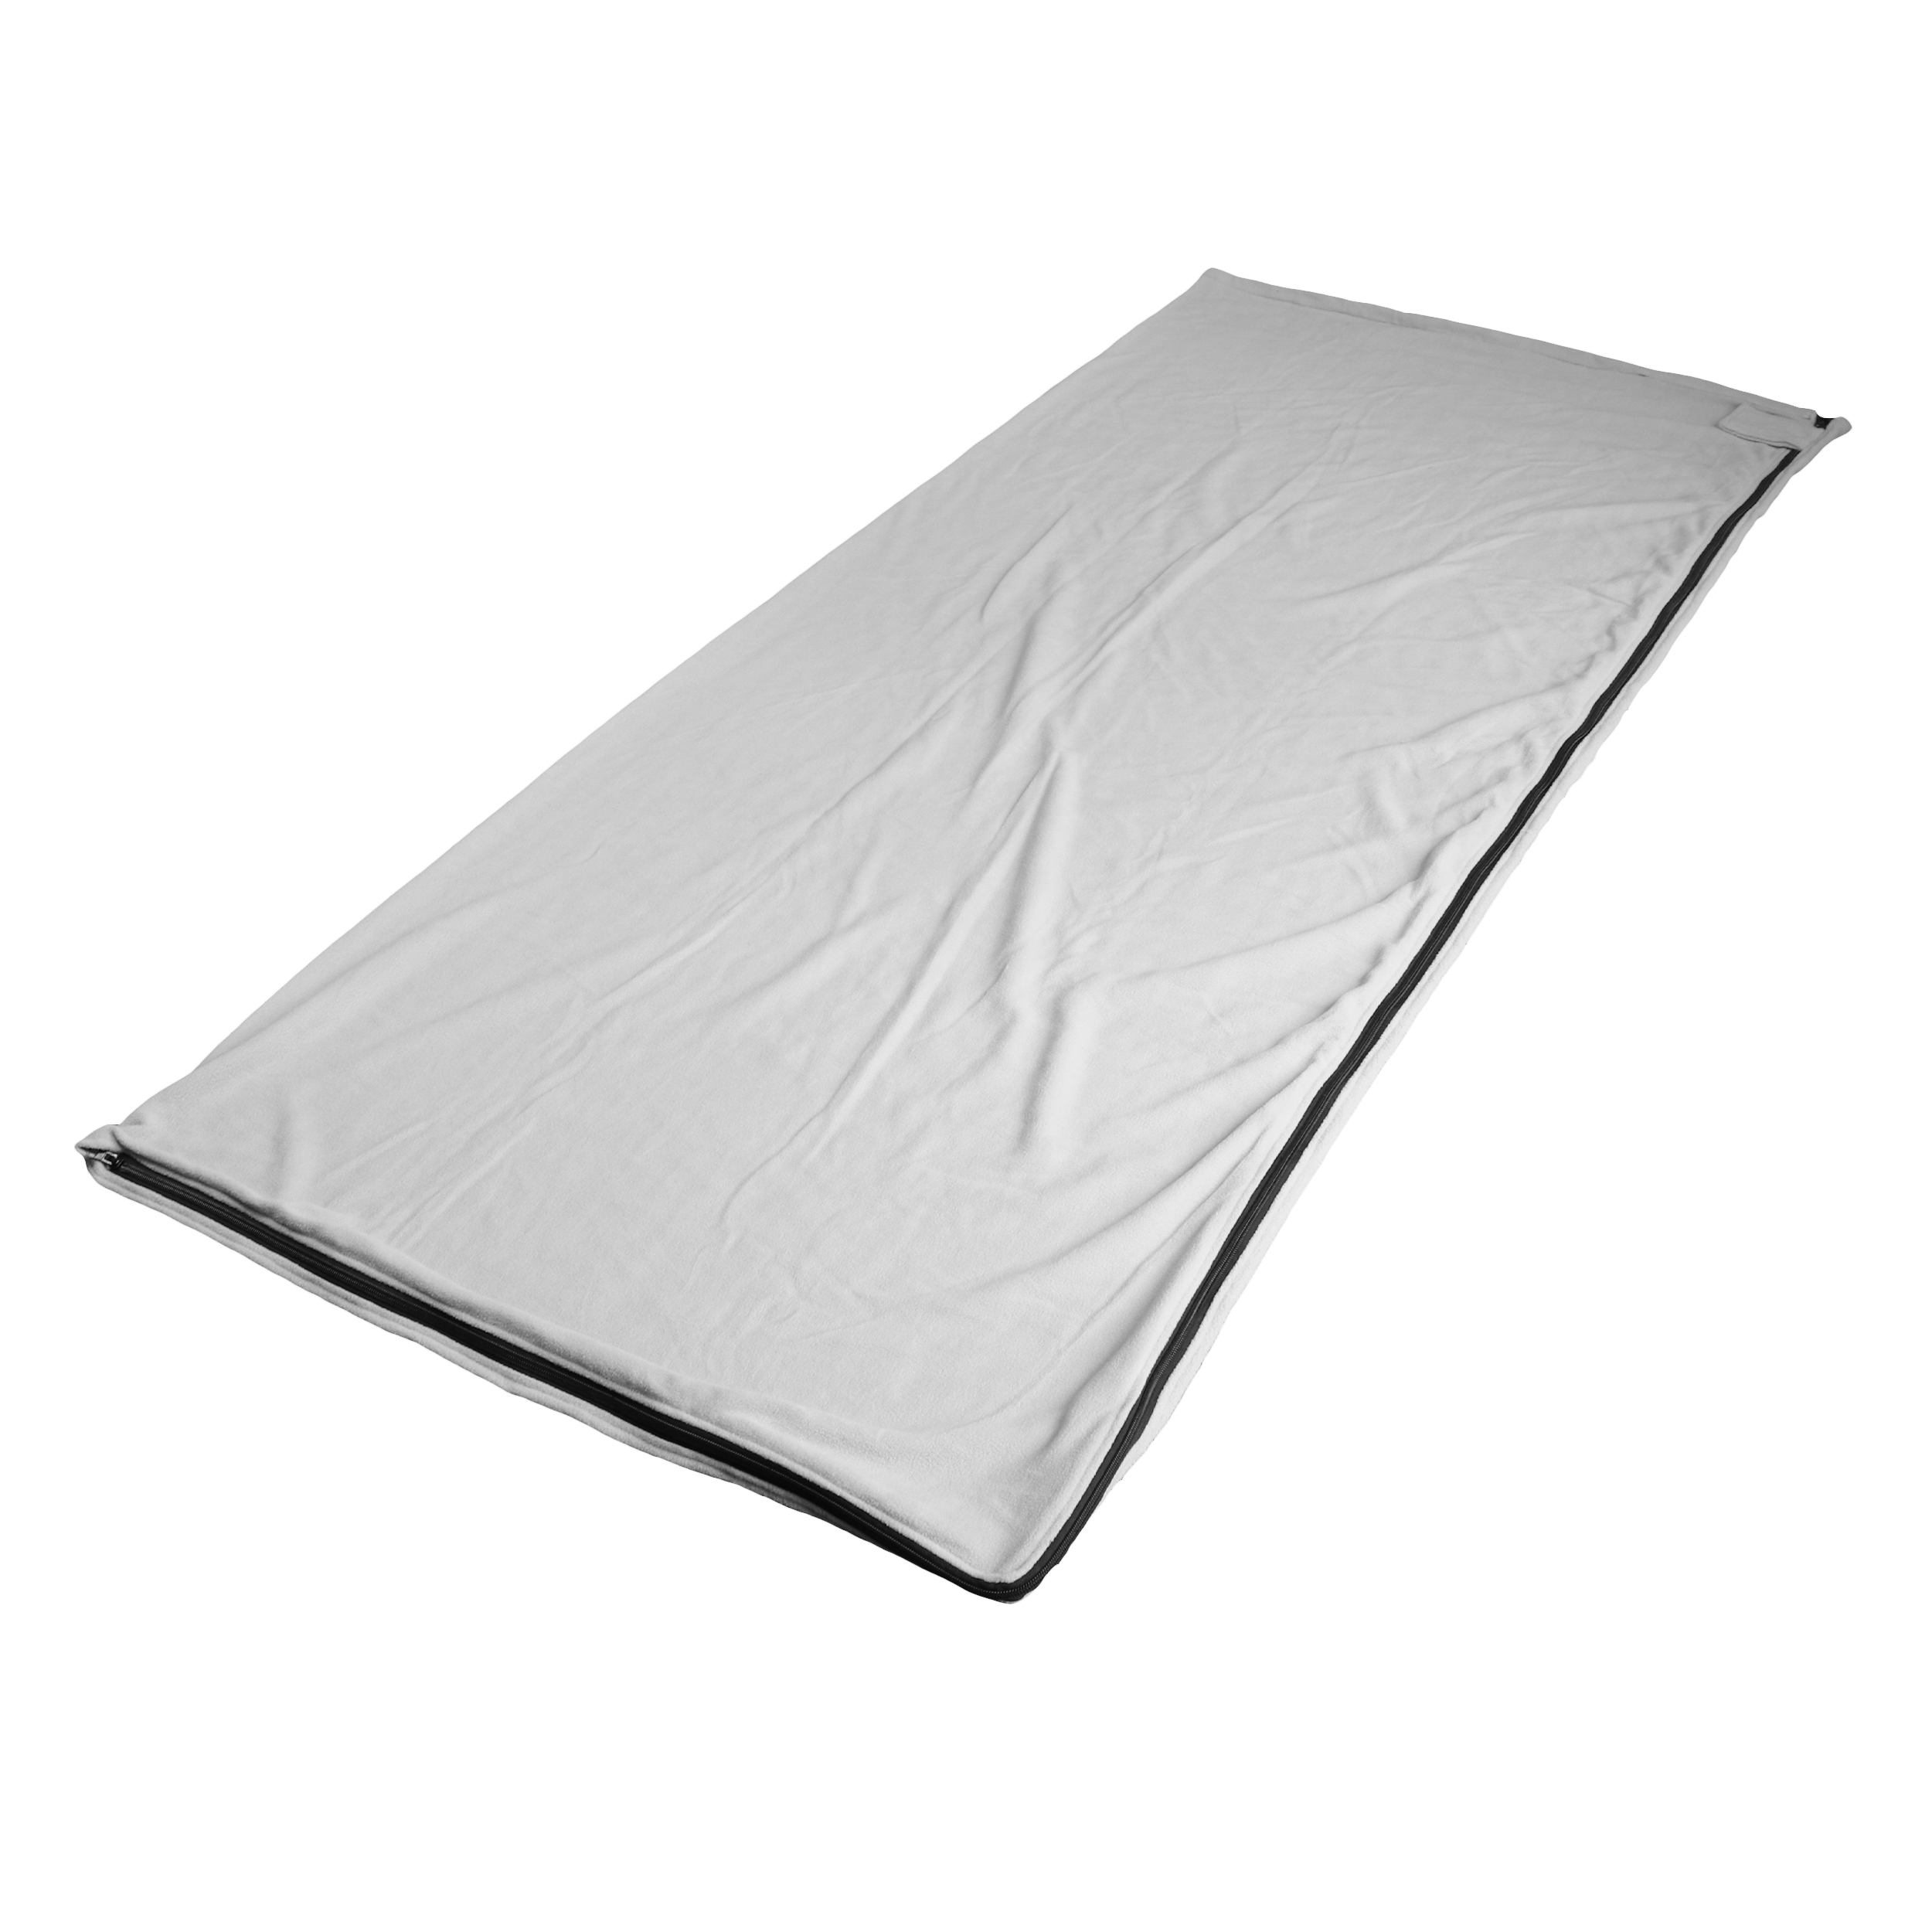 Microfiber Fleece Sleeping Bag Liner, Grey - image 2 of 7